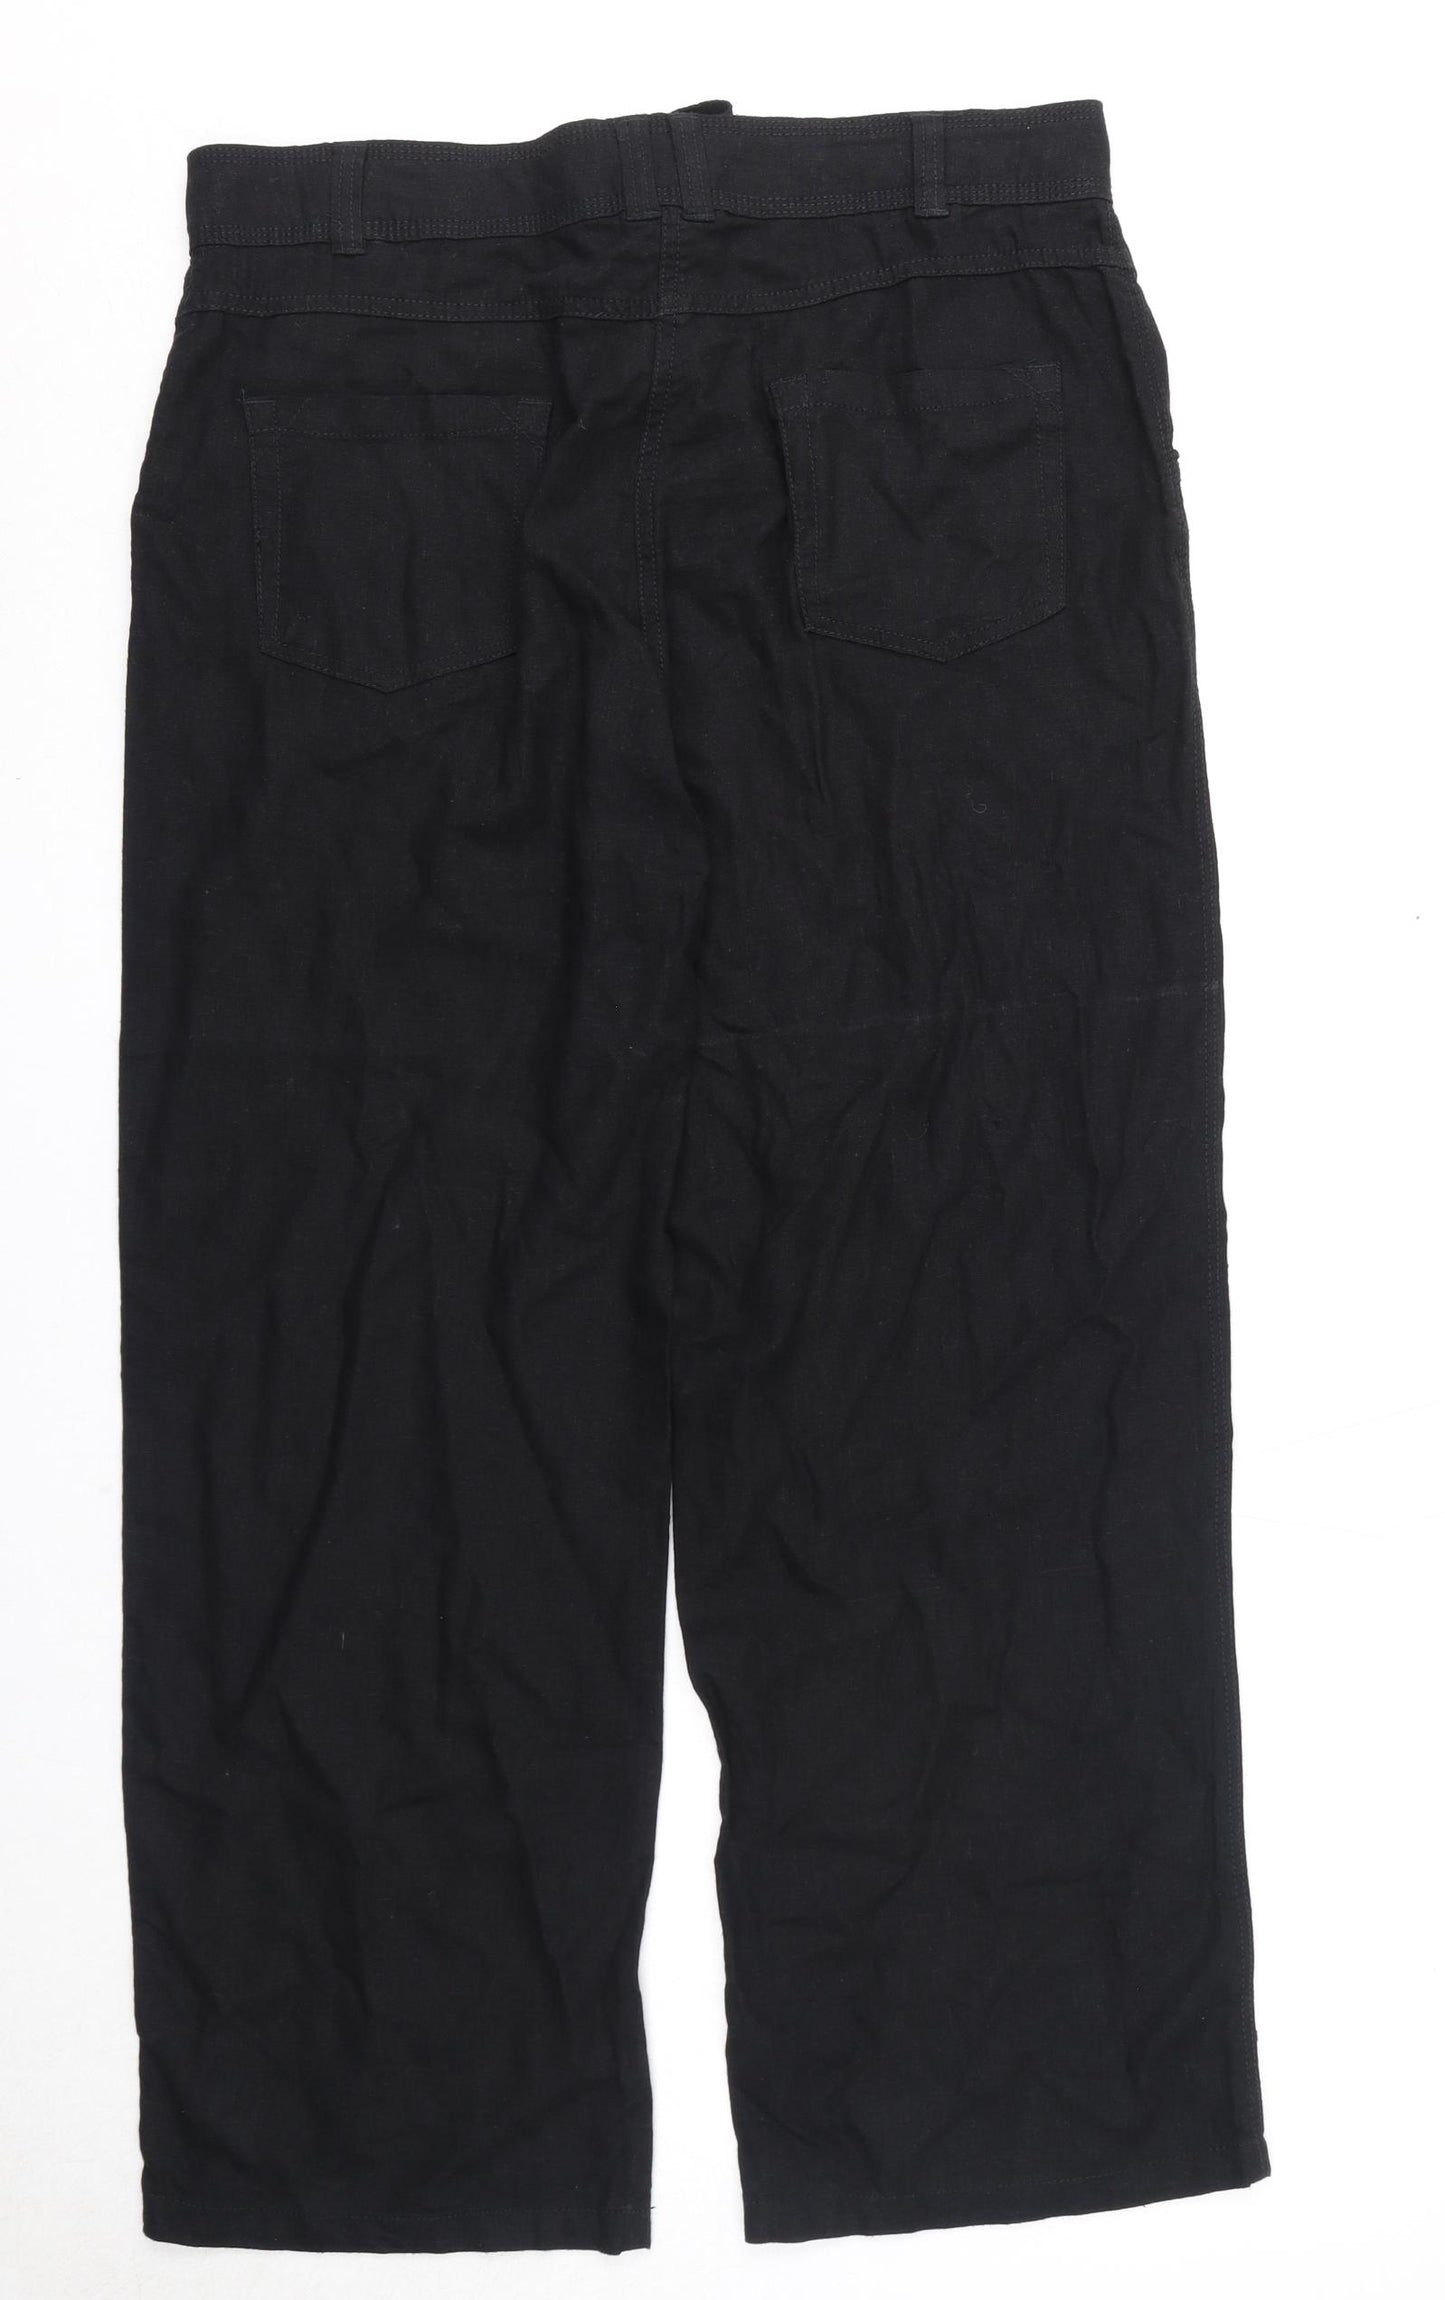 M&Co Womens Black Linen Trousers Size 14 Regular Zip